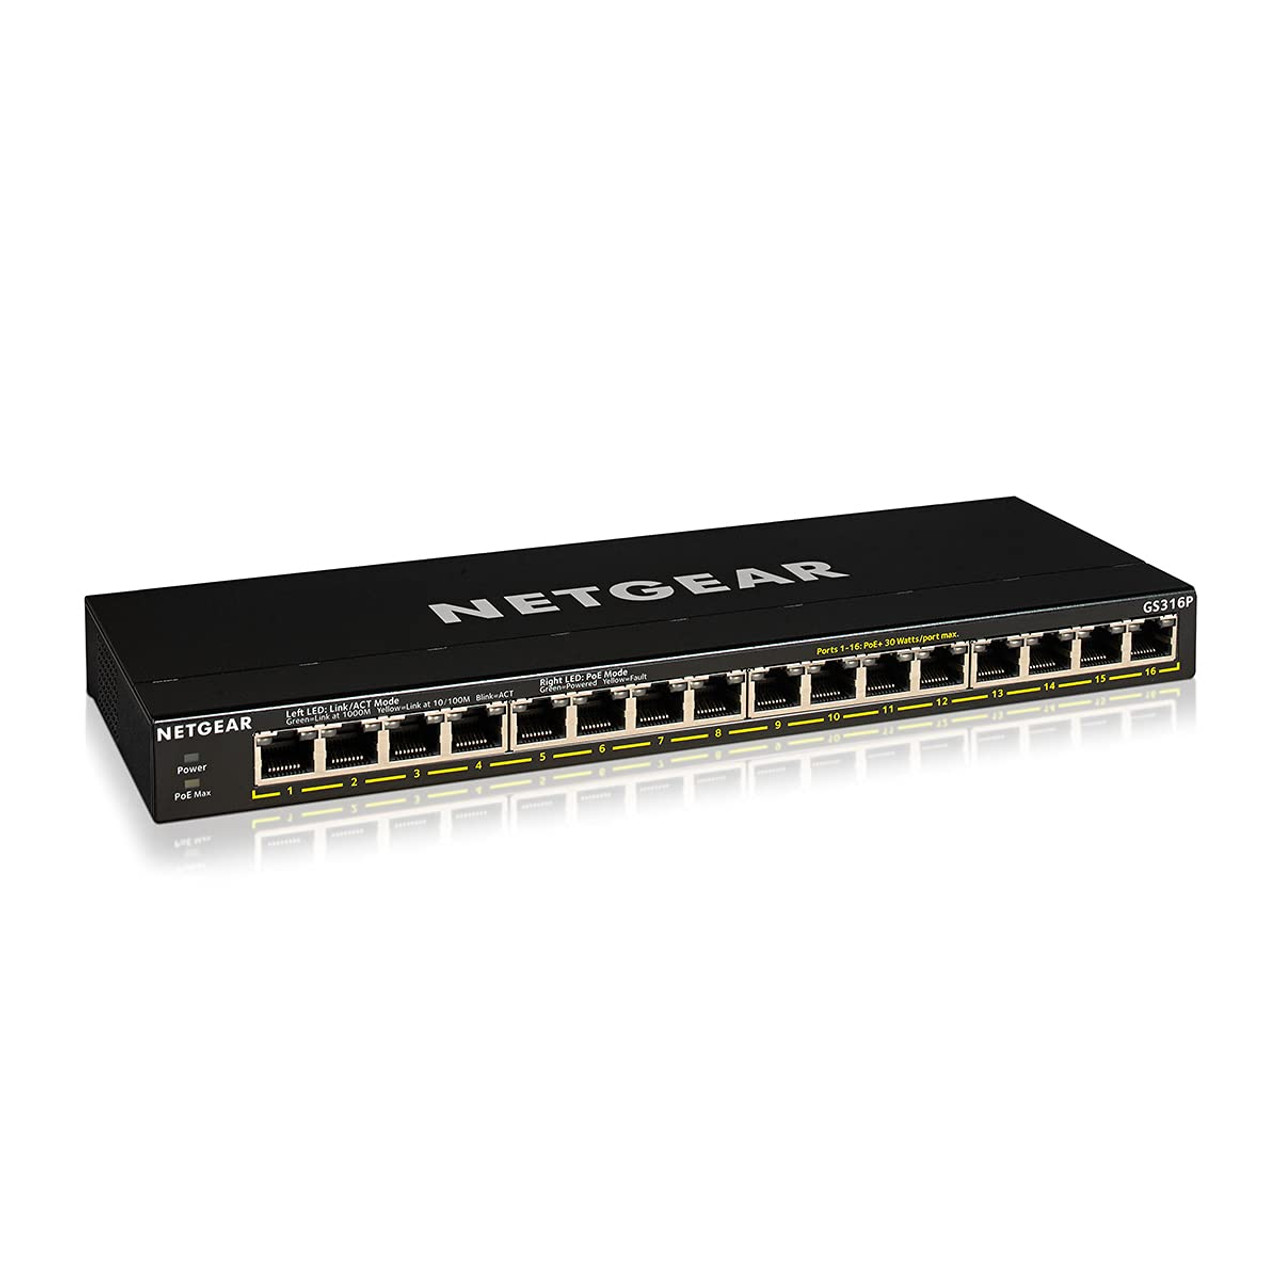 NETGEAR 16-Port Gigabit Ethernet Unmanaged PoE+ Switch (GS316P) - with 16 x PoE+ @ 115W, Desktop or Wall Mount